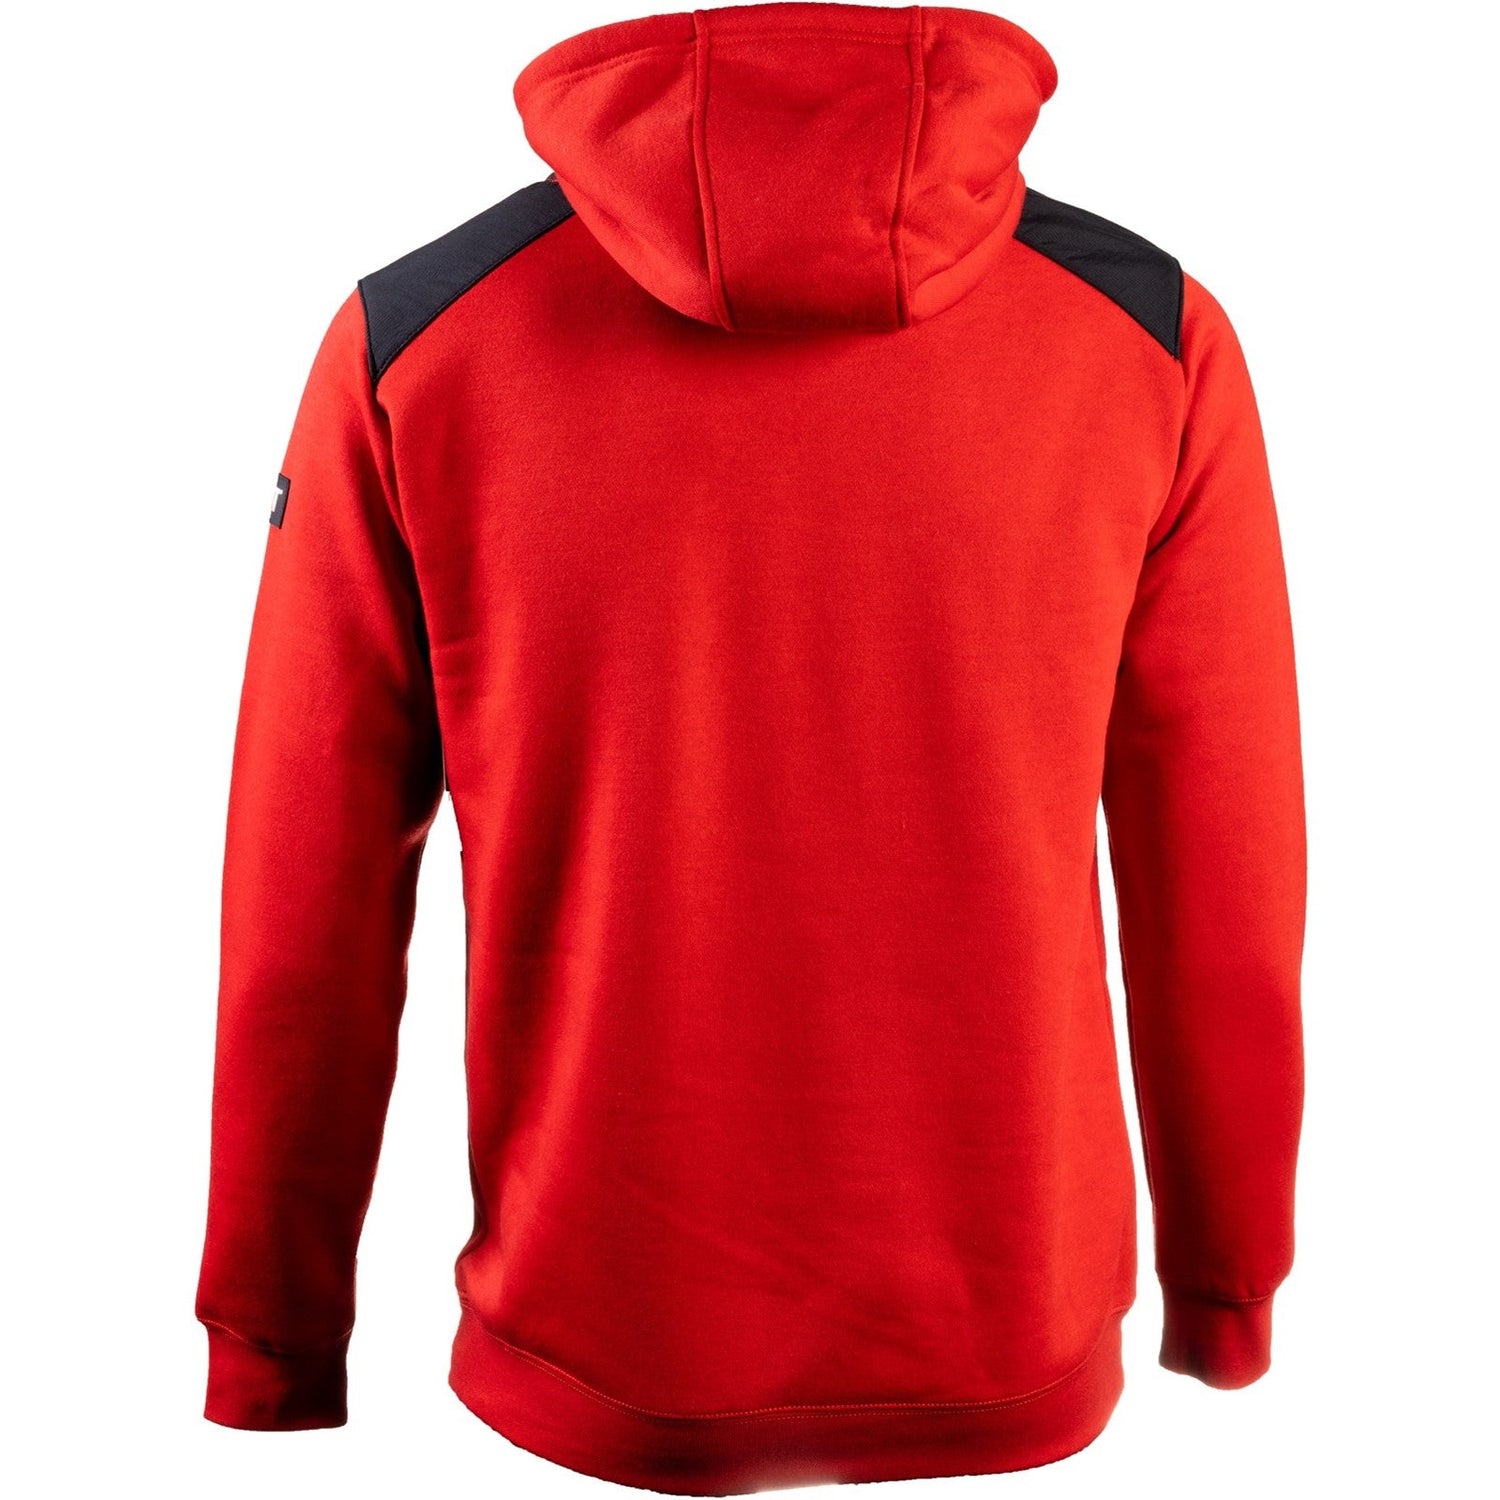 Caterpillar Essentials Hooded Sweatshirt. Hot Red. Rear view 